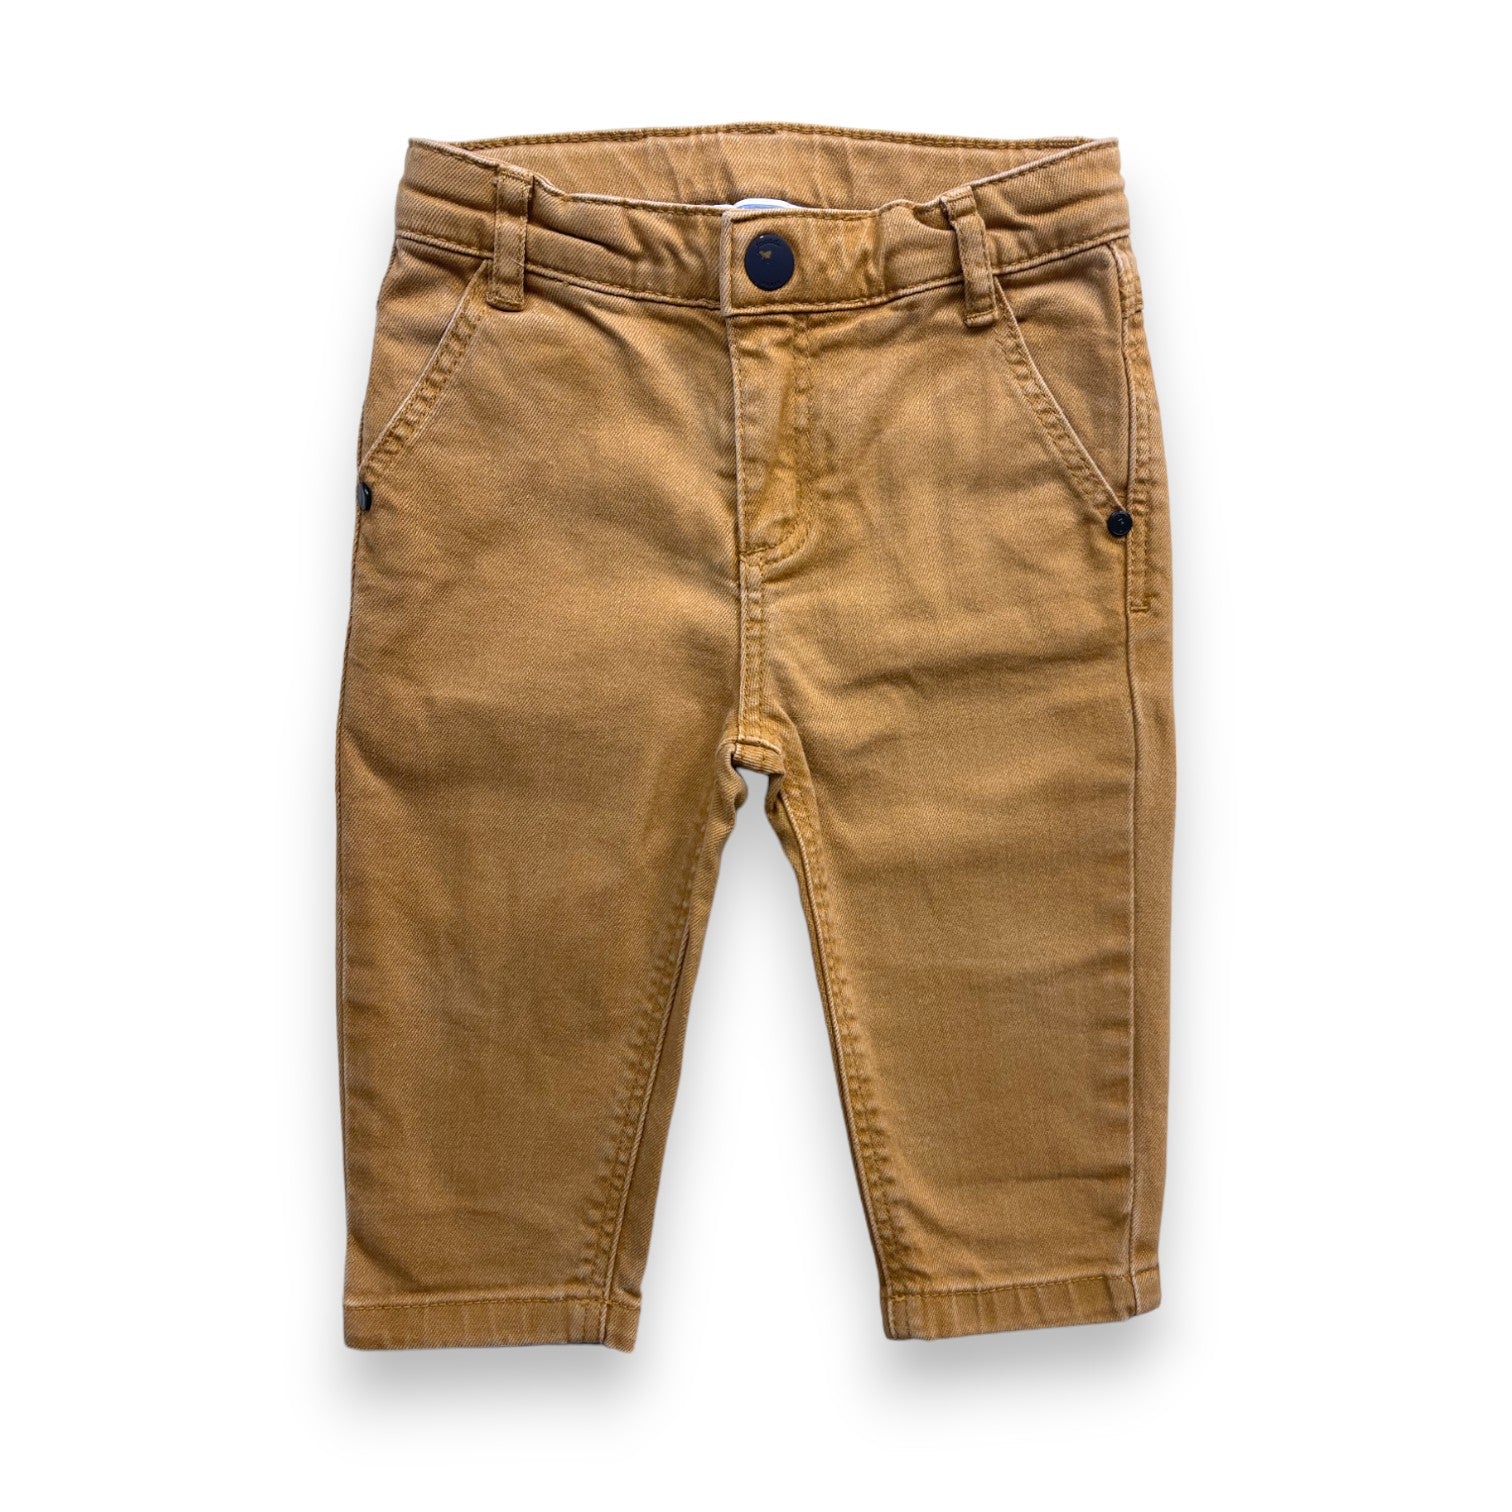 JACADI - Pantalon marron clair - 12 mois